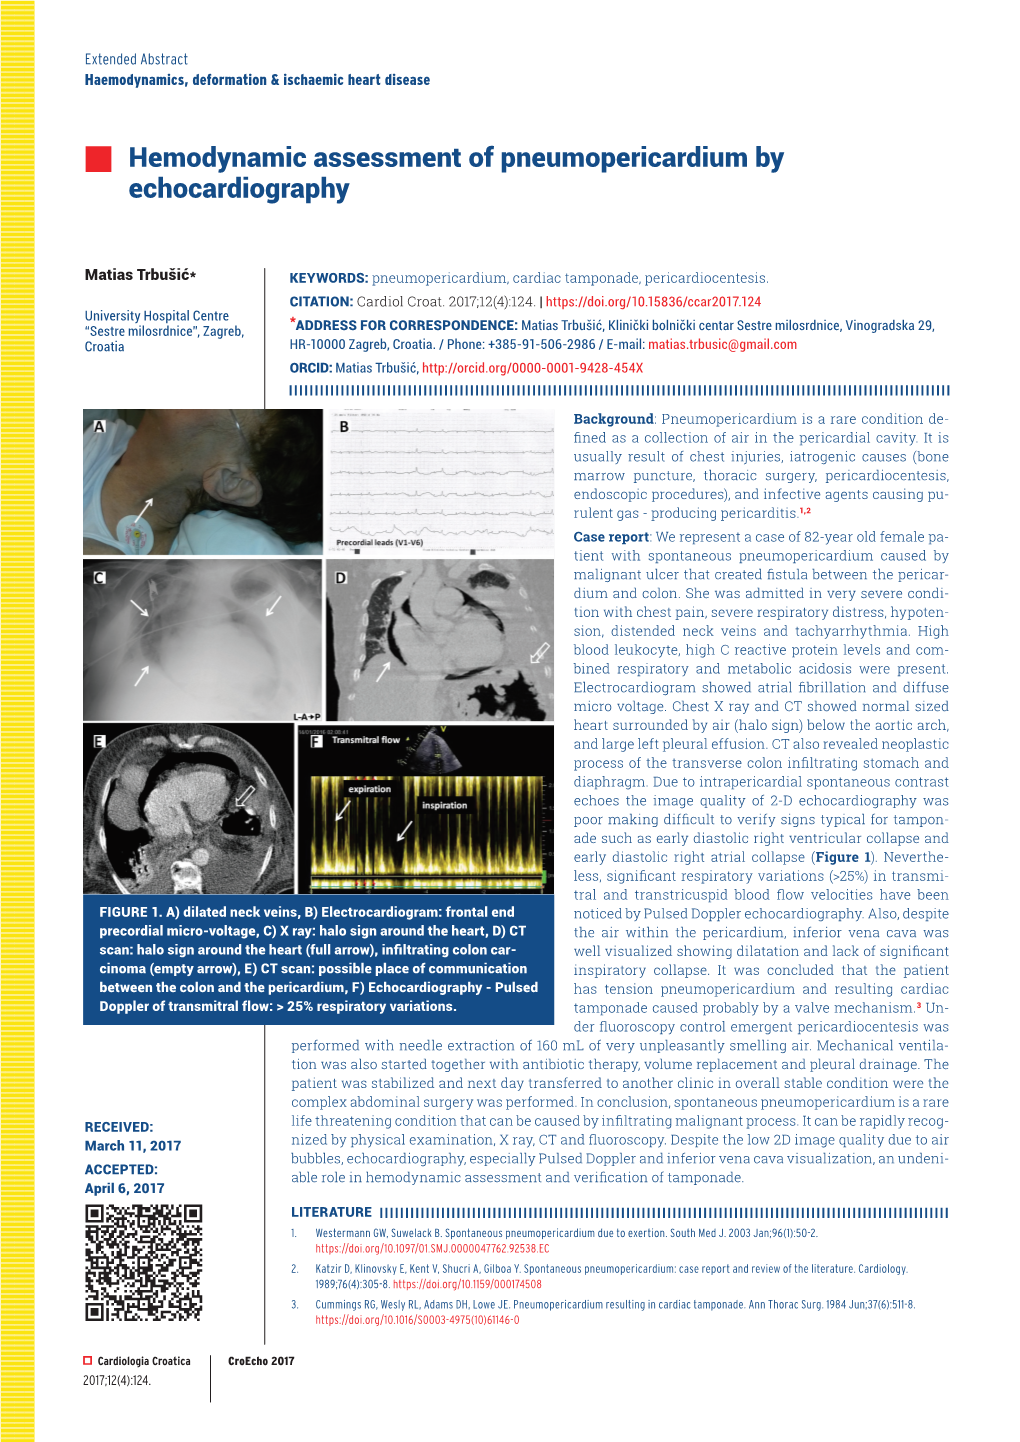 Hemodynamic Assessment of Pneumopericardium by Echocardiography